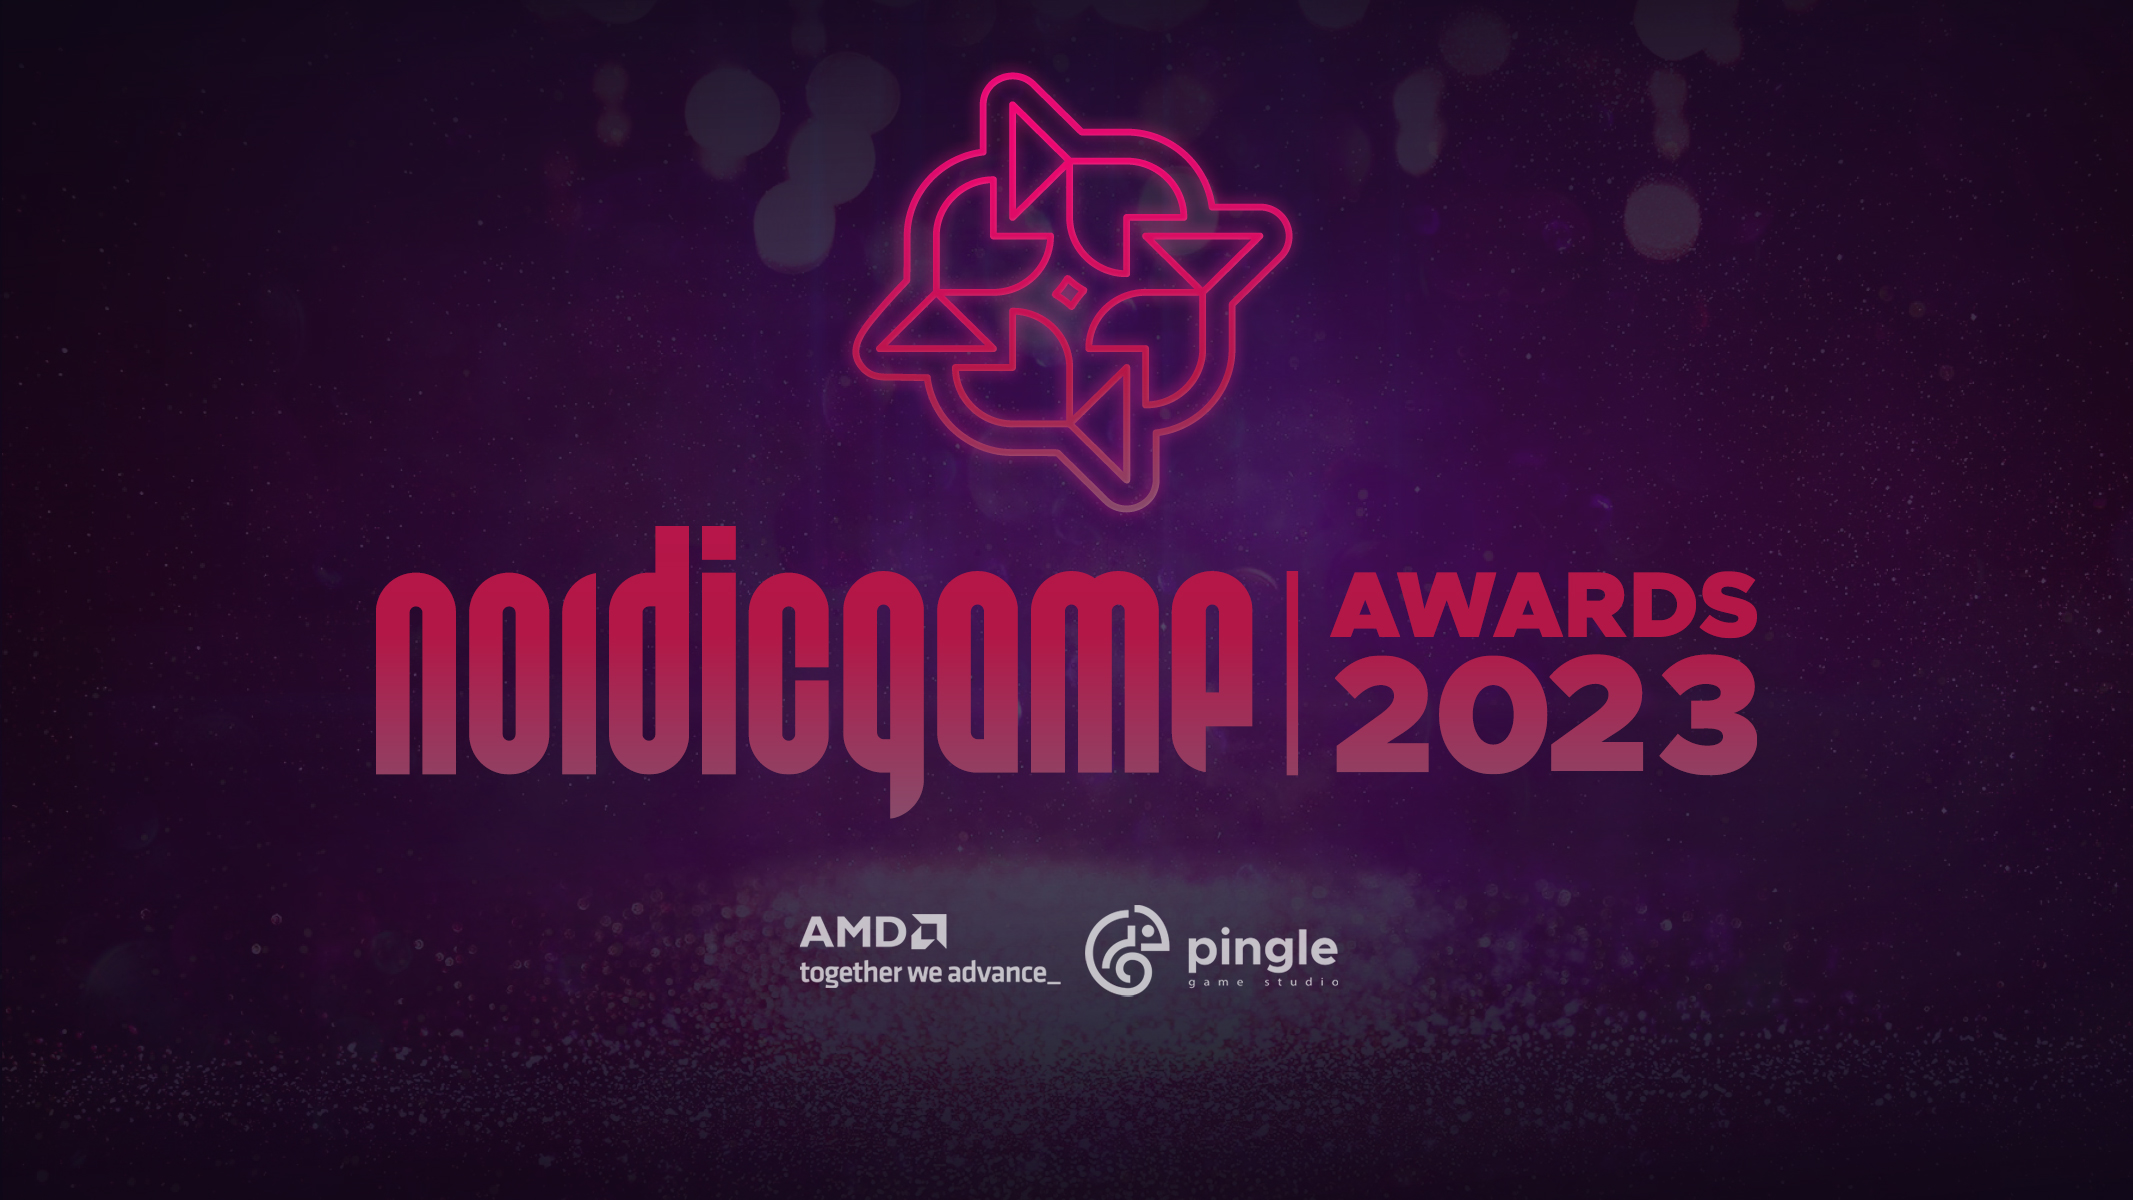 Nordic Game Awards 2023 winners is revealedNews